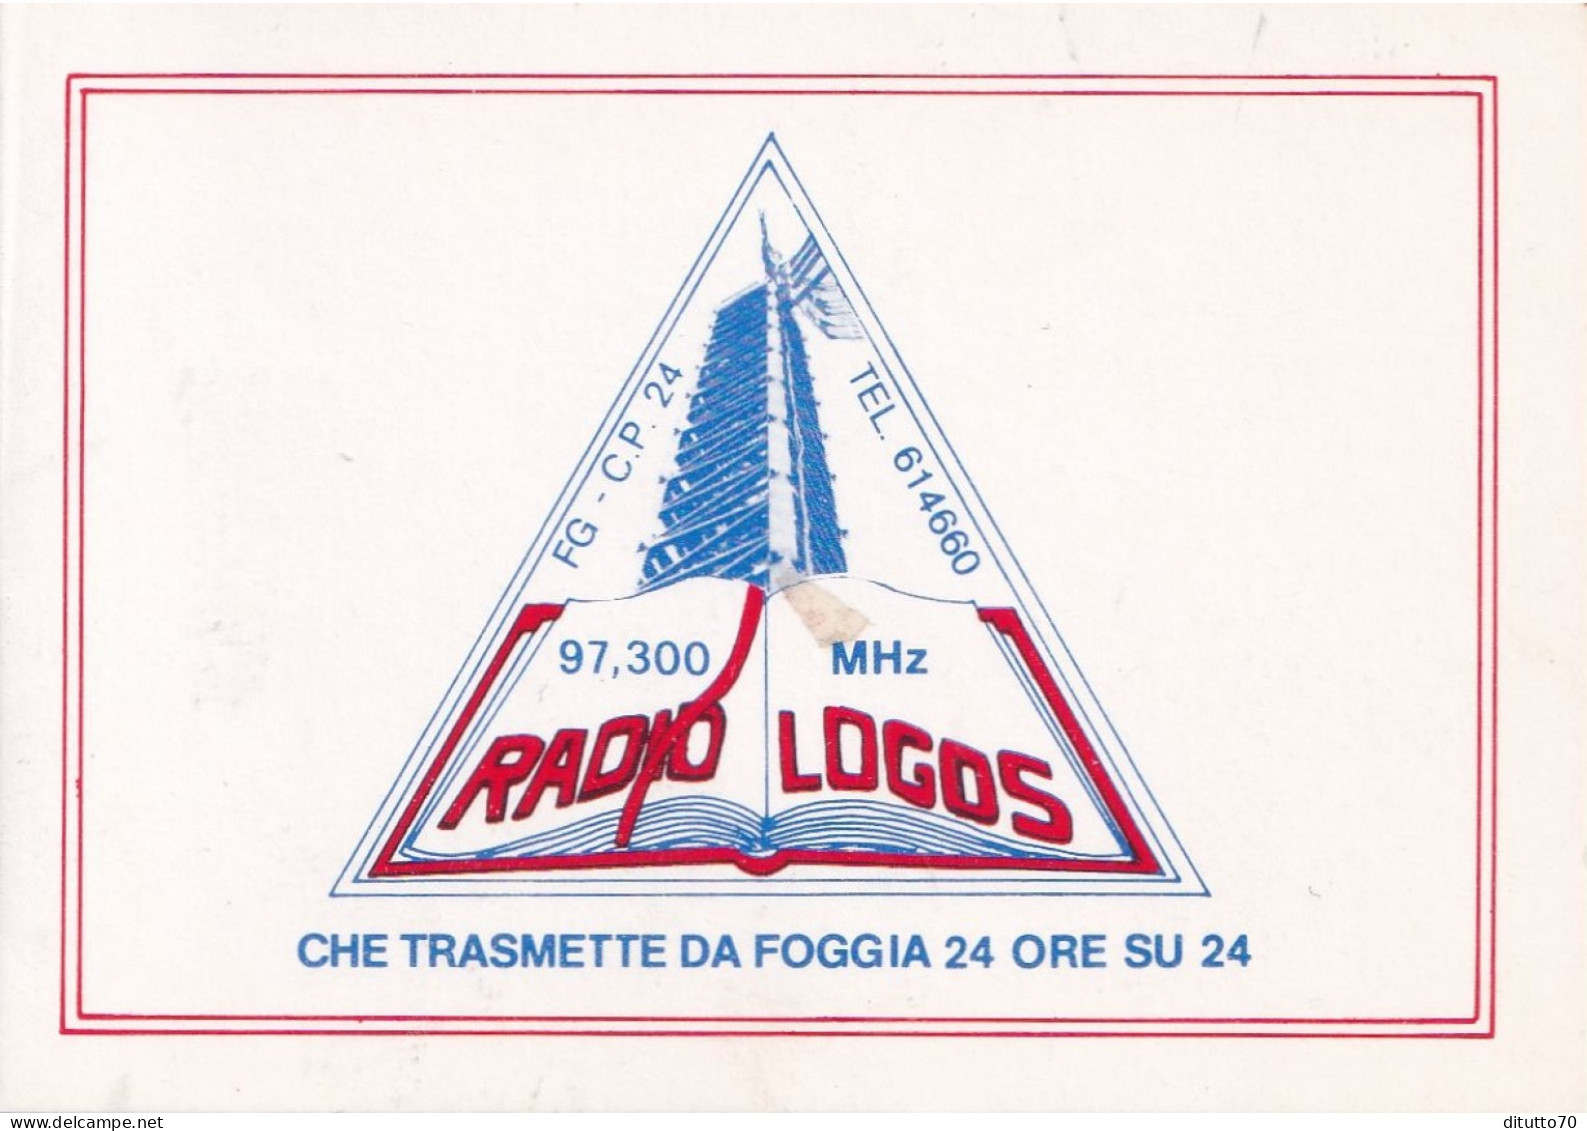 Calendarietto - RADIO LOGOS - Foggia - Anno 1990 - Kleinformat : 1981-90